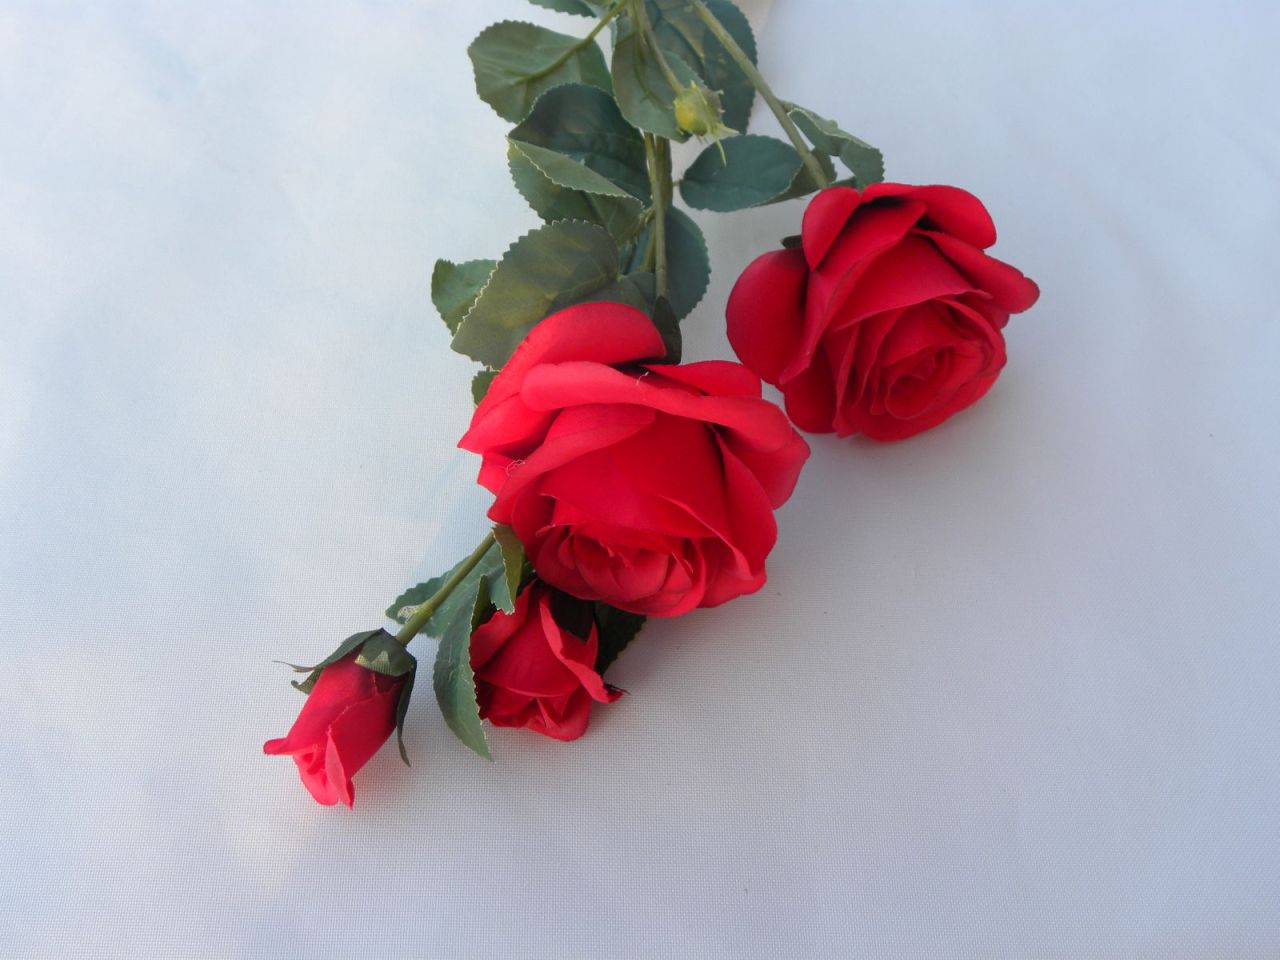 růže dlouhá červená posl. 1 ks skladem